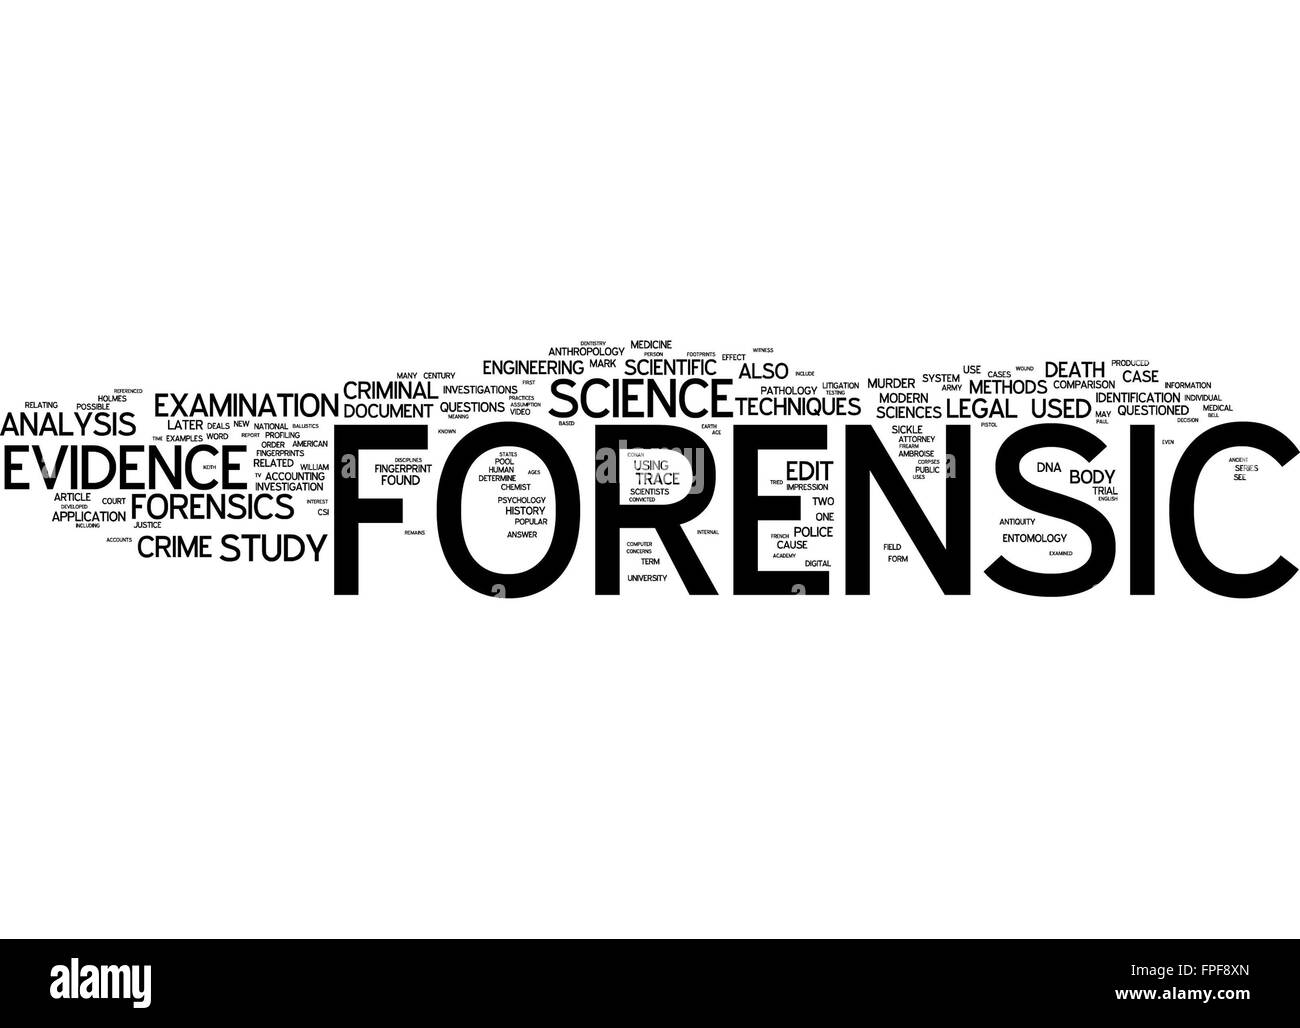 forensic-science-evidence-analysis-examination-stock-photo-royalty-free-image-99910573-alamy